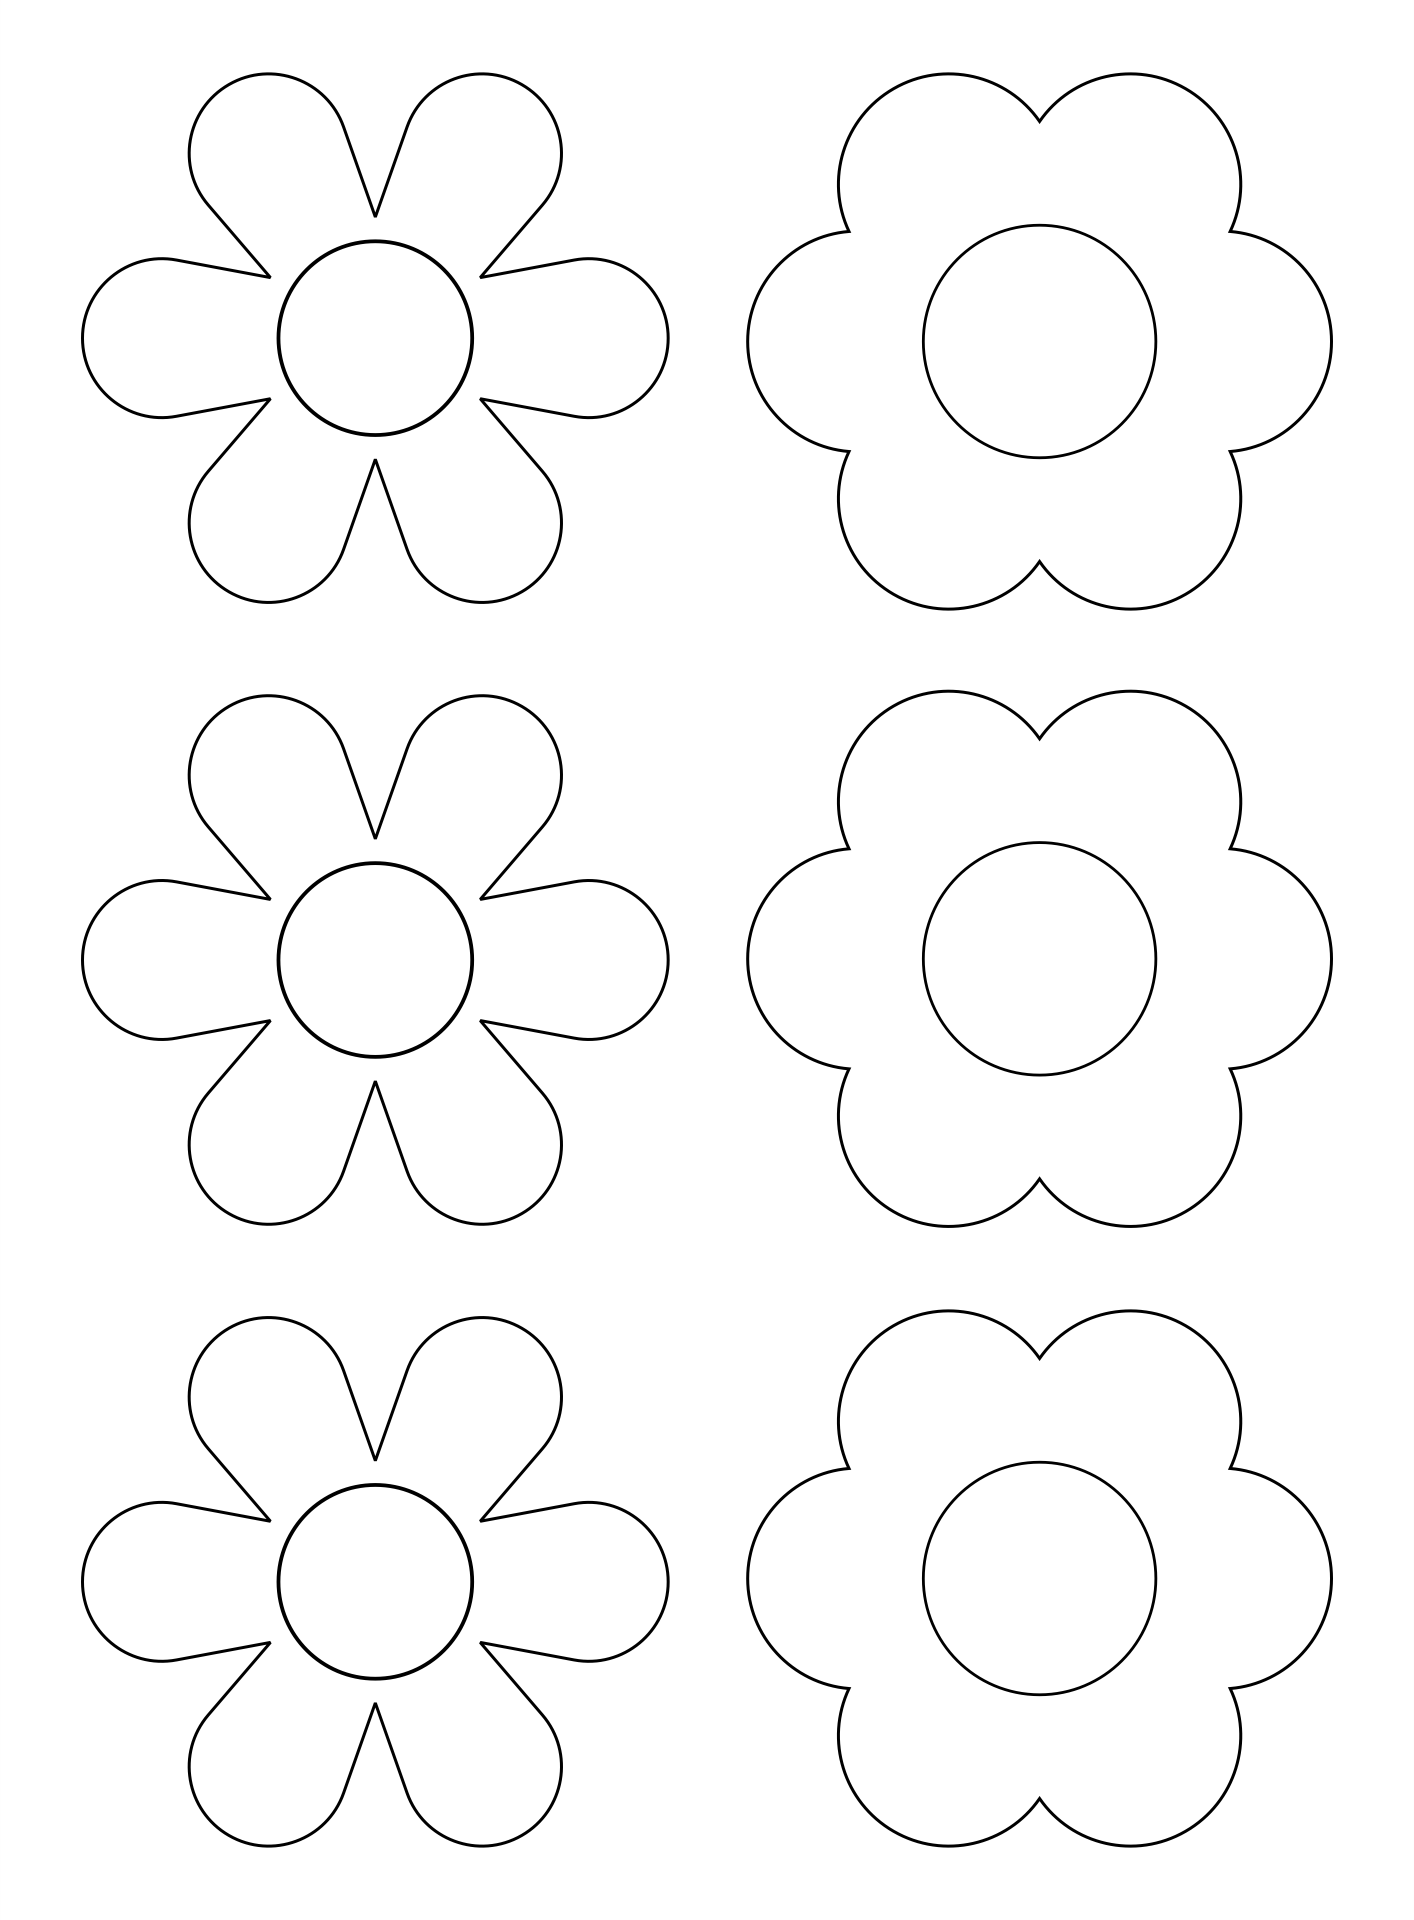 Paper Flower Templates Printable